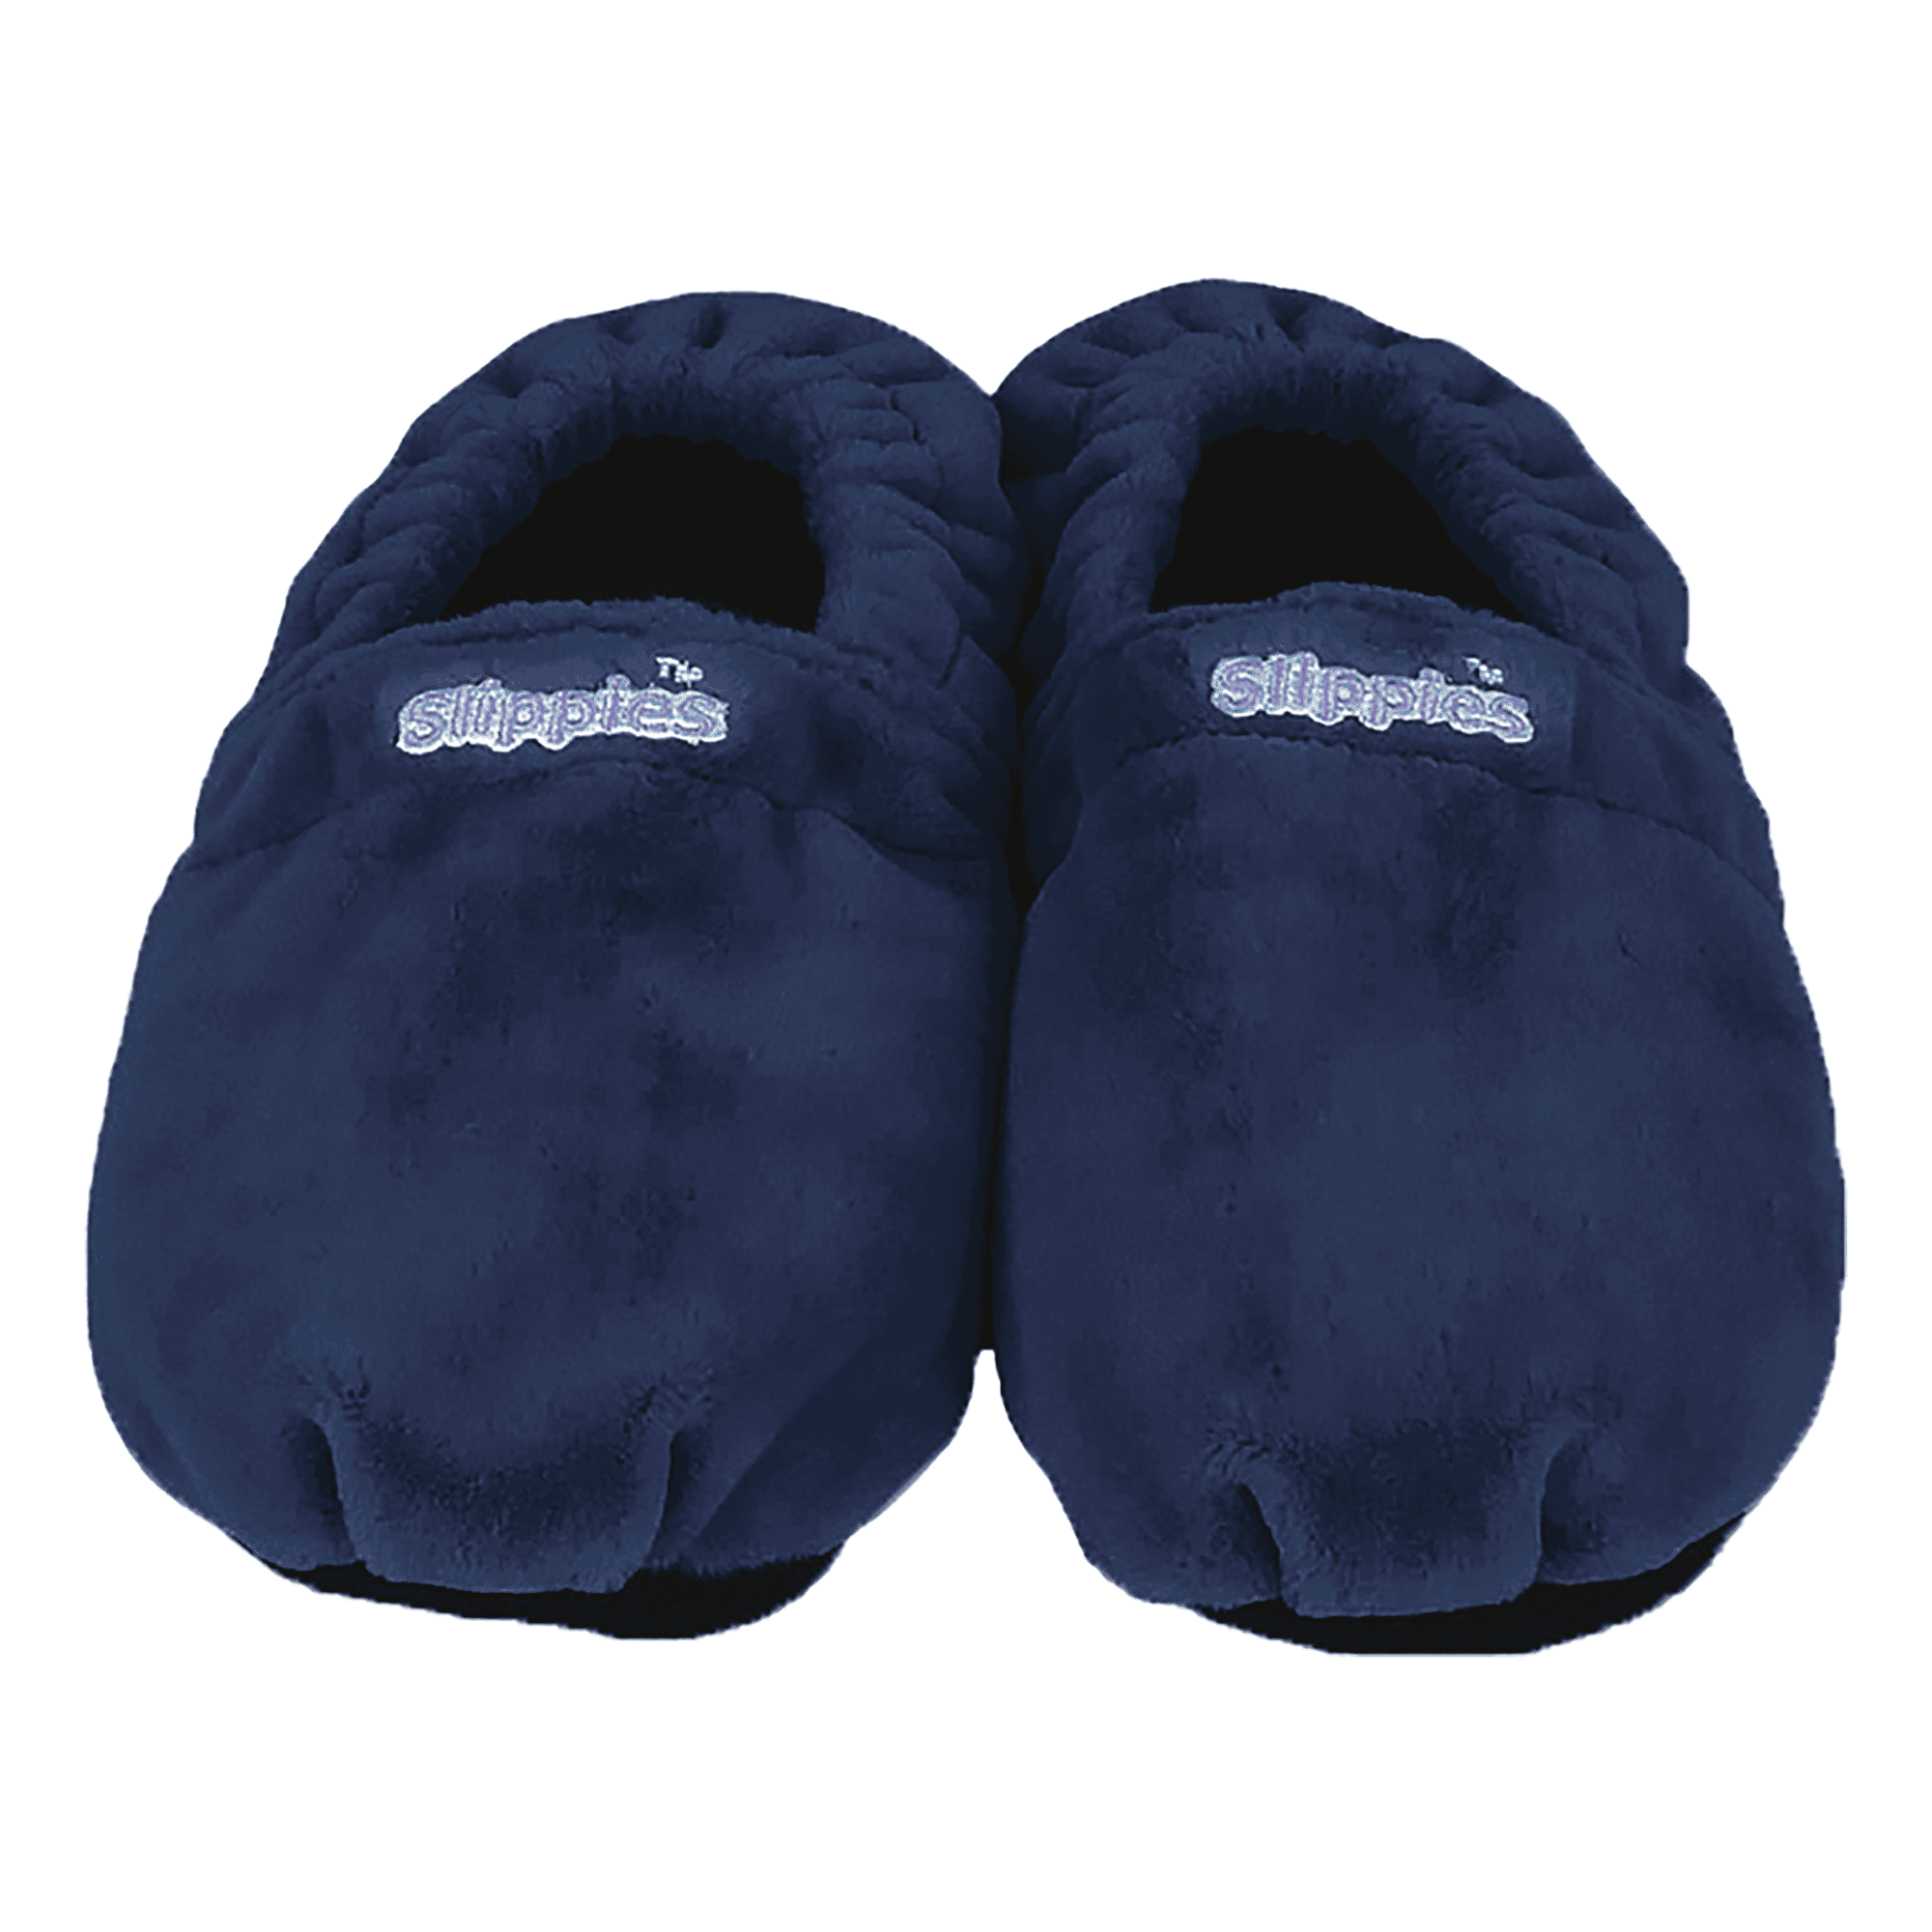 Warmies® Slippies® Classic Gr. 41-45 warmies Blau 2000583007401 1